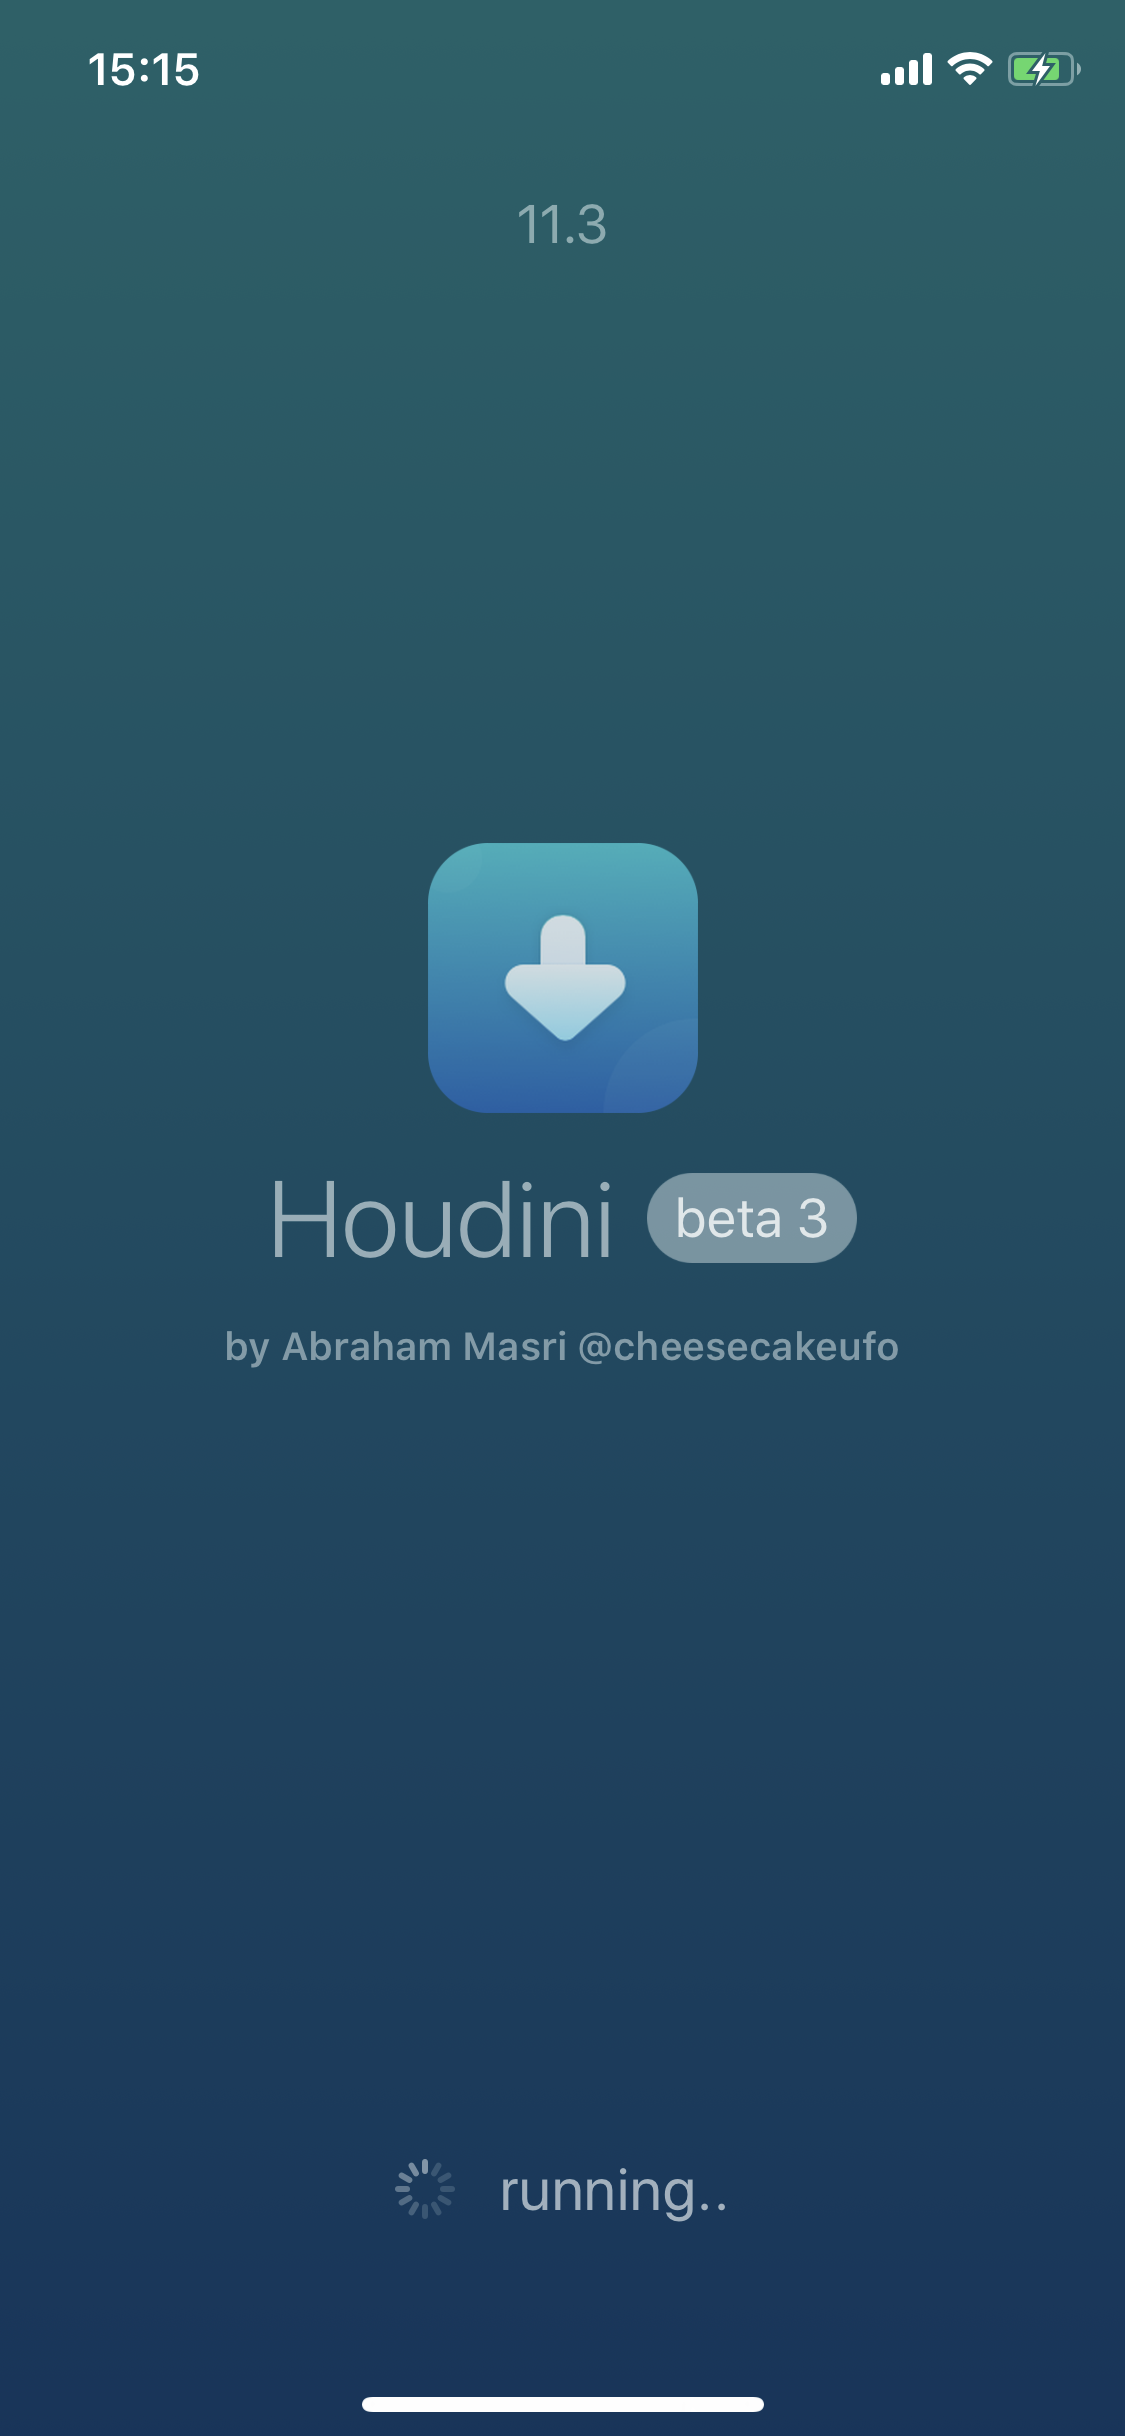 Houdini iOS 11.3.1 Semi-Jailbreak Released